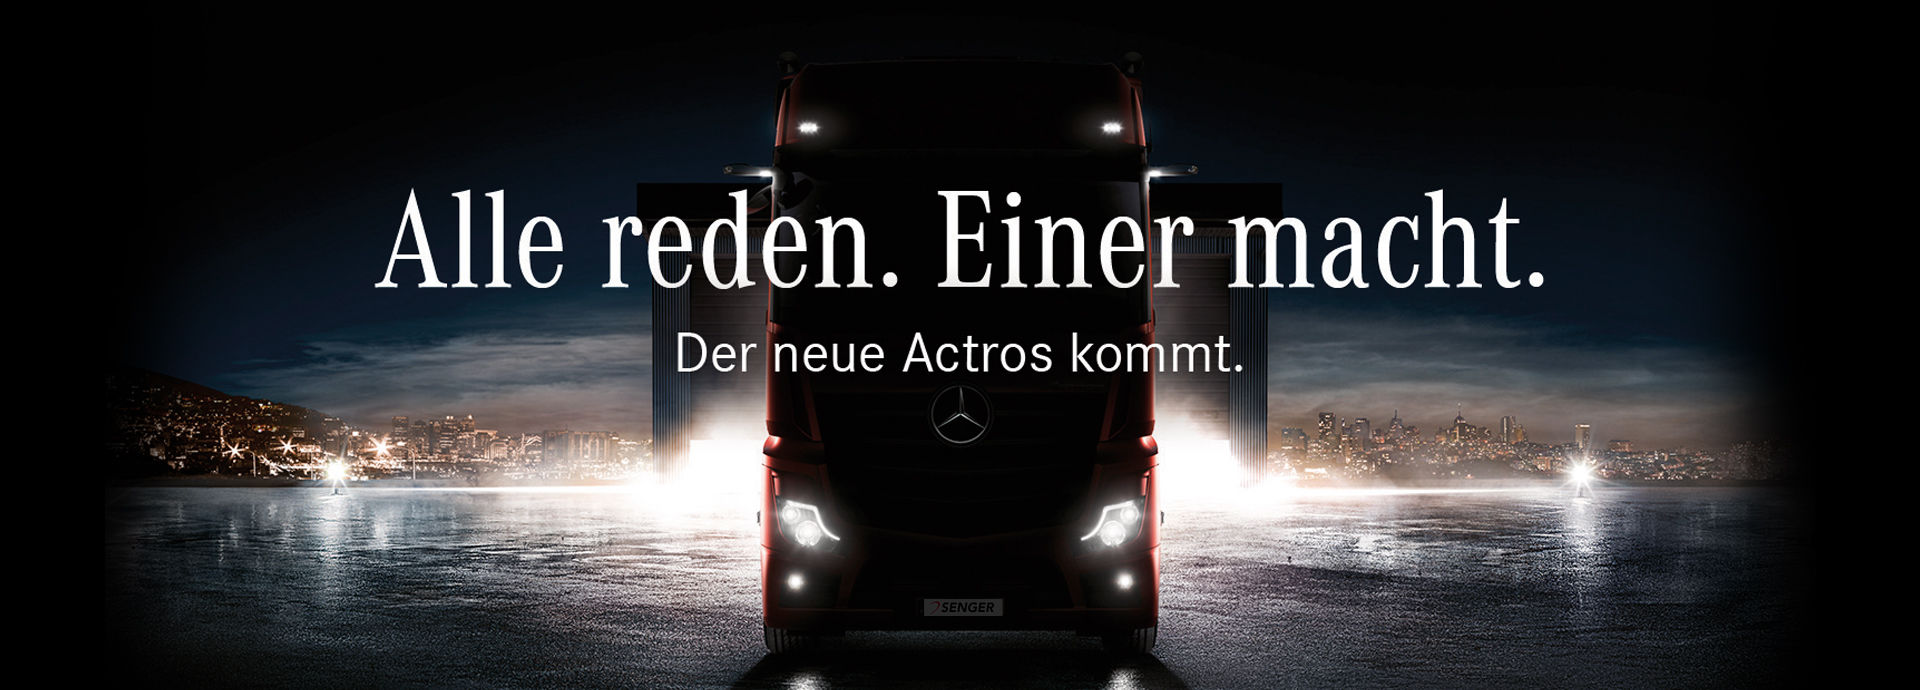 Mercedes Benz Lkw Auto Senger